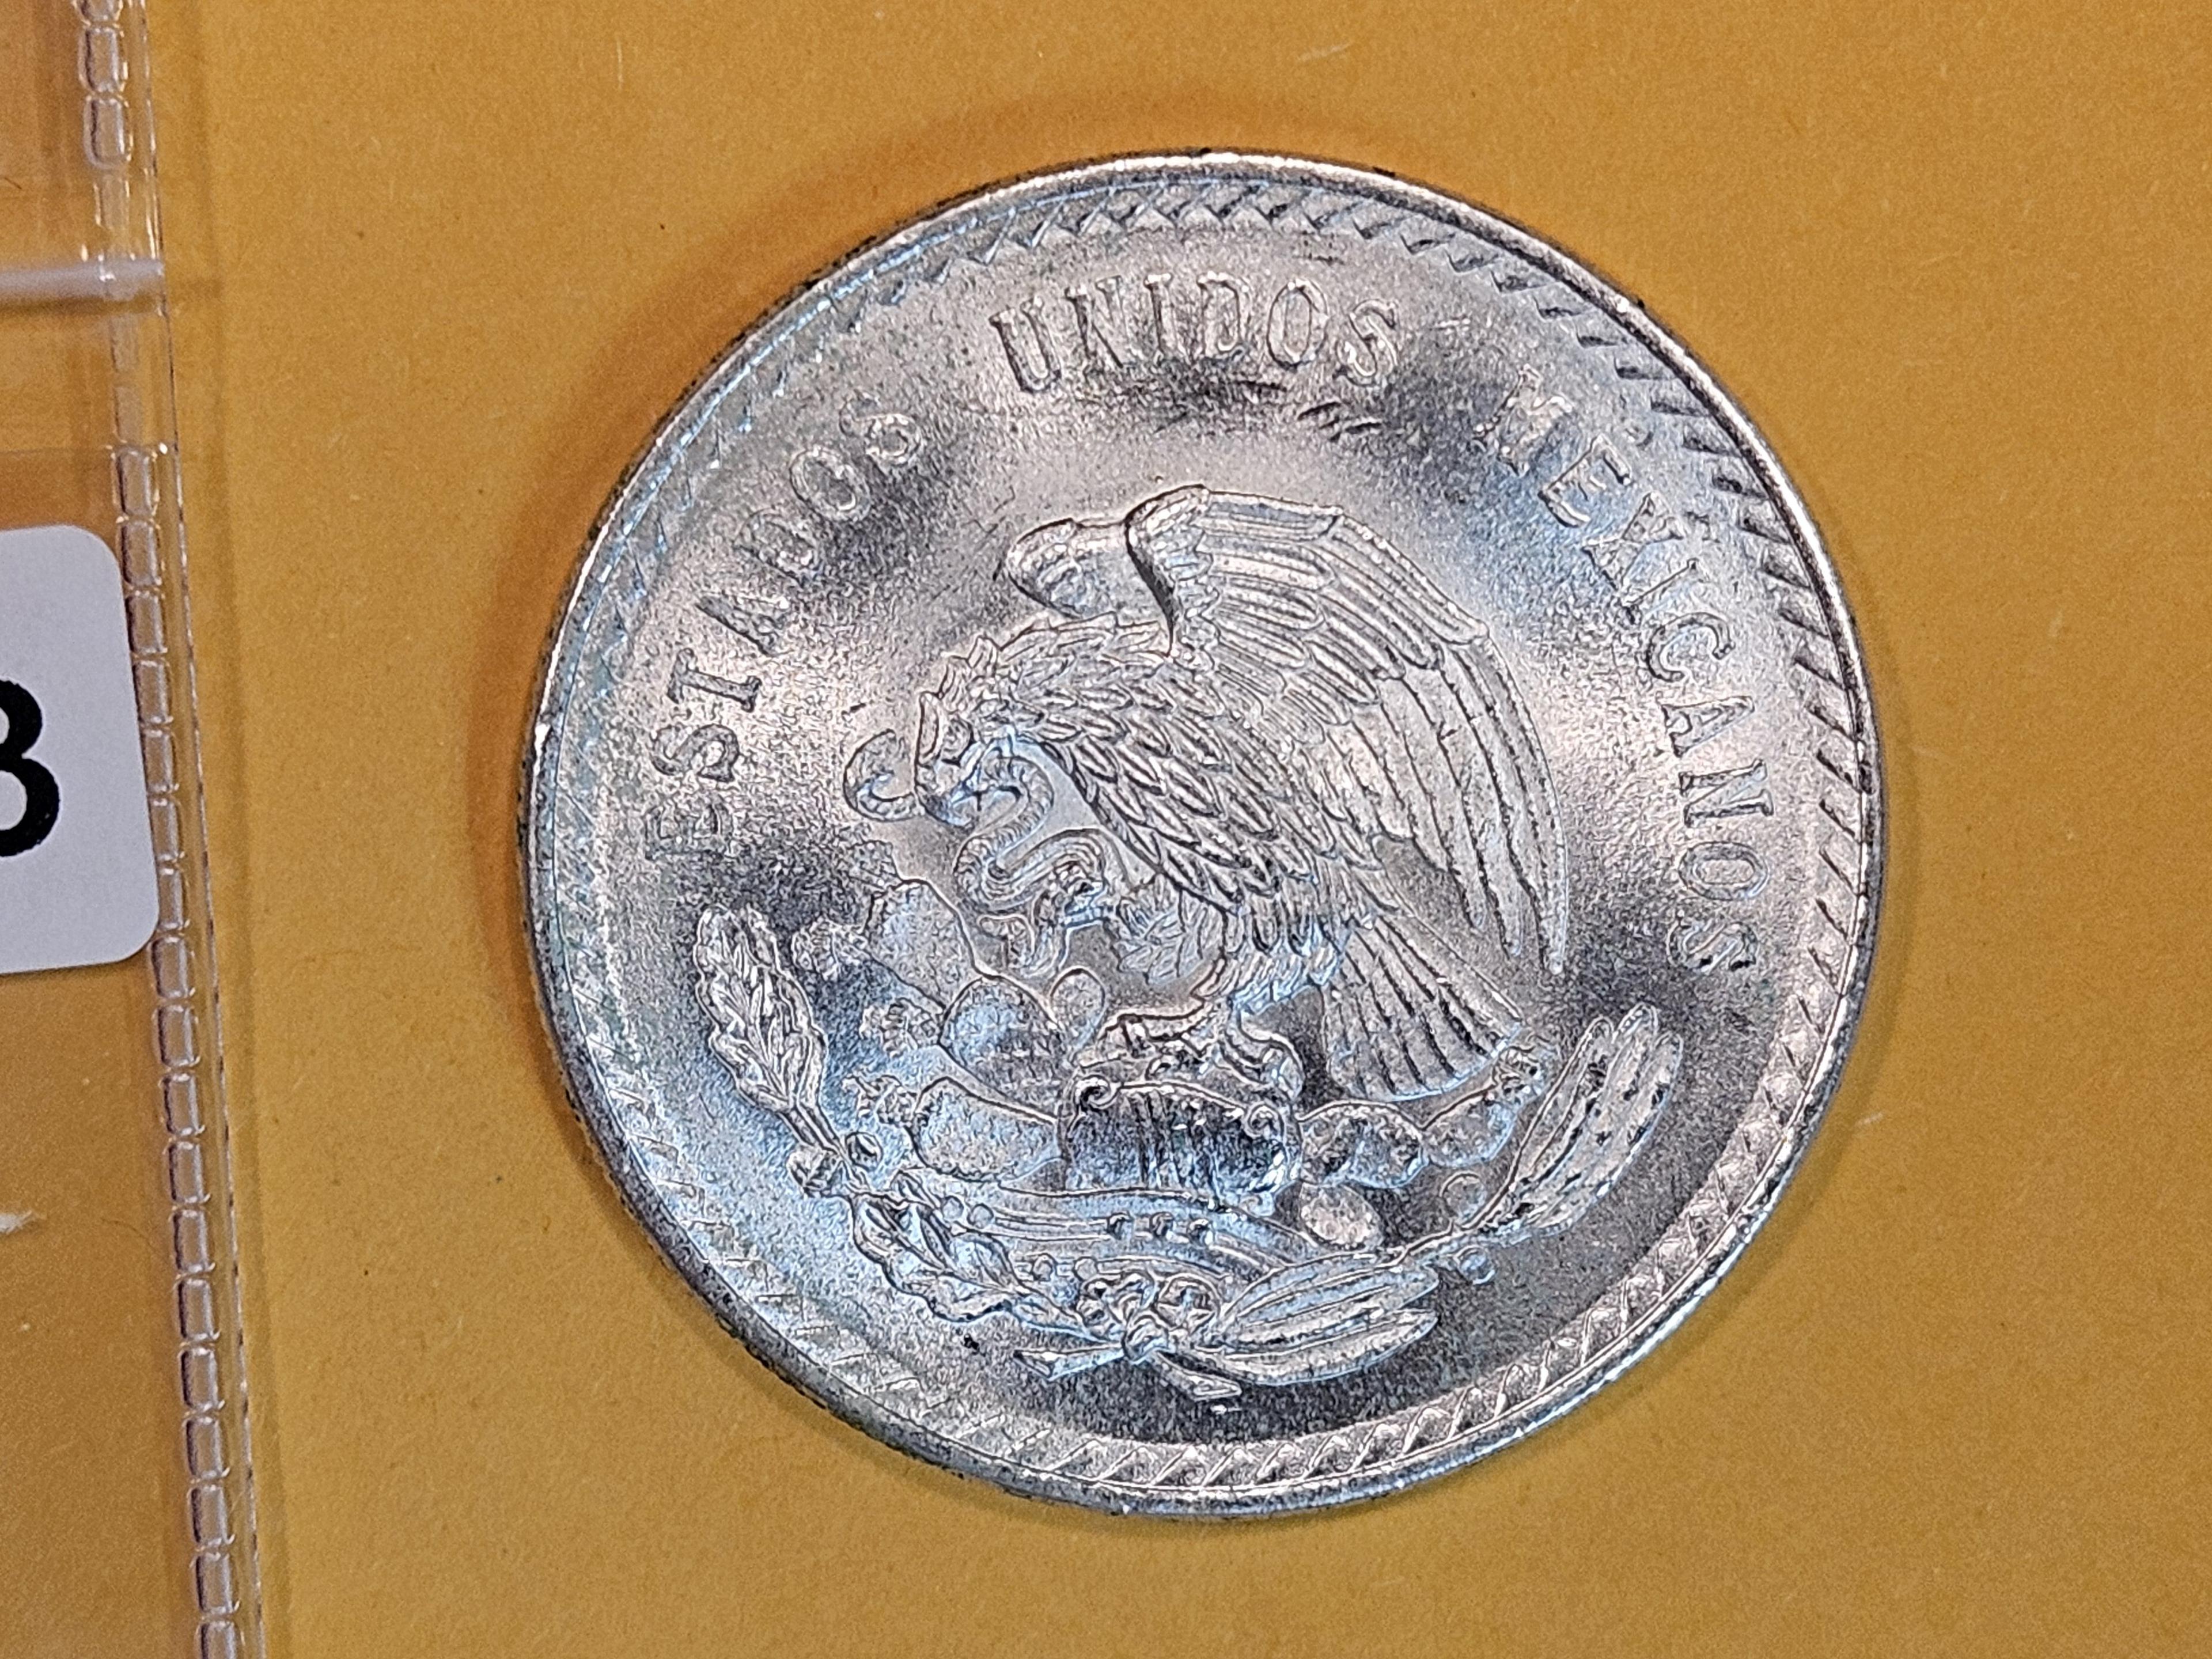 Brilliant uncirculated 1948 Mexico 10 pesos